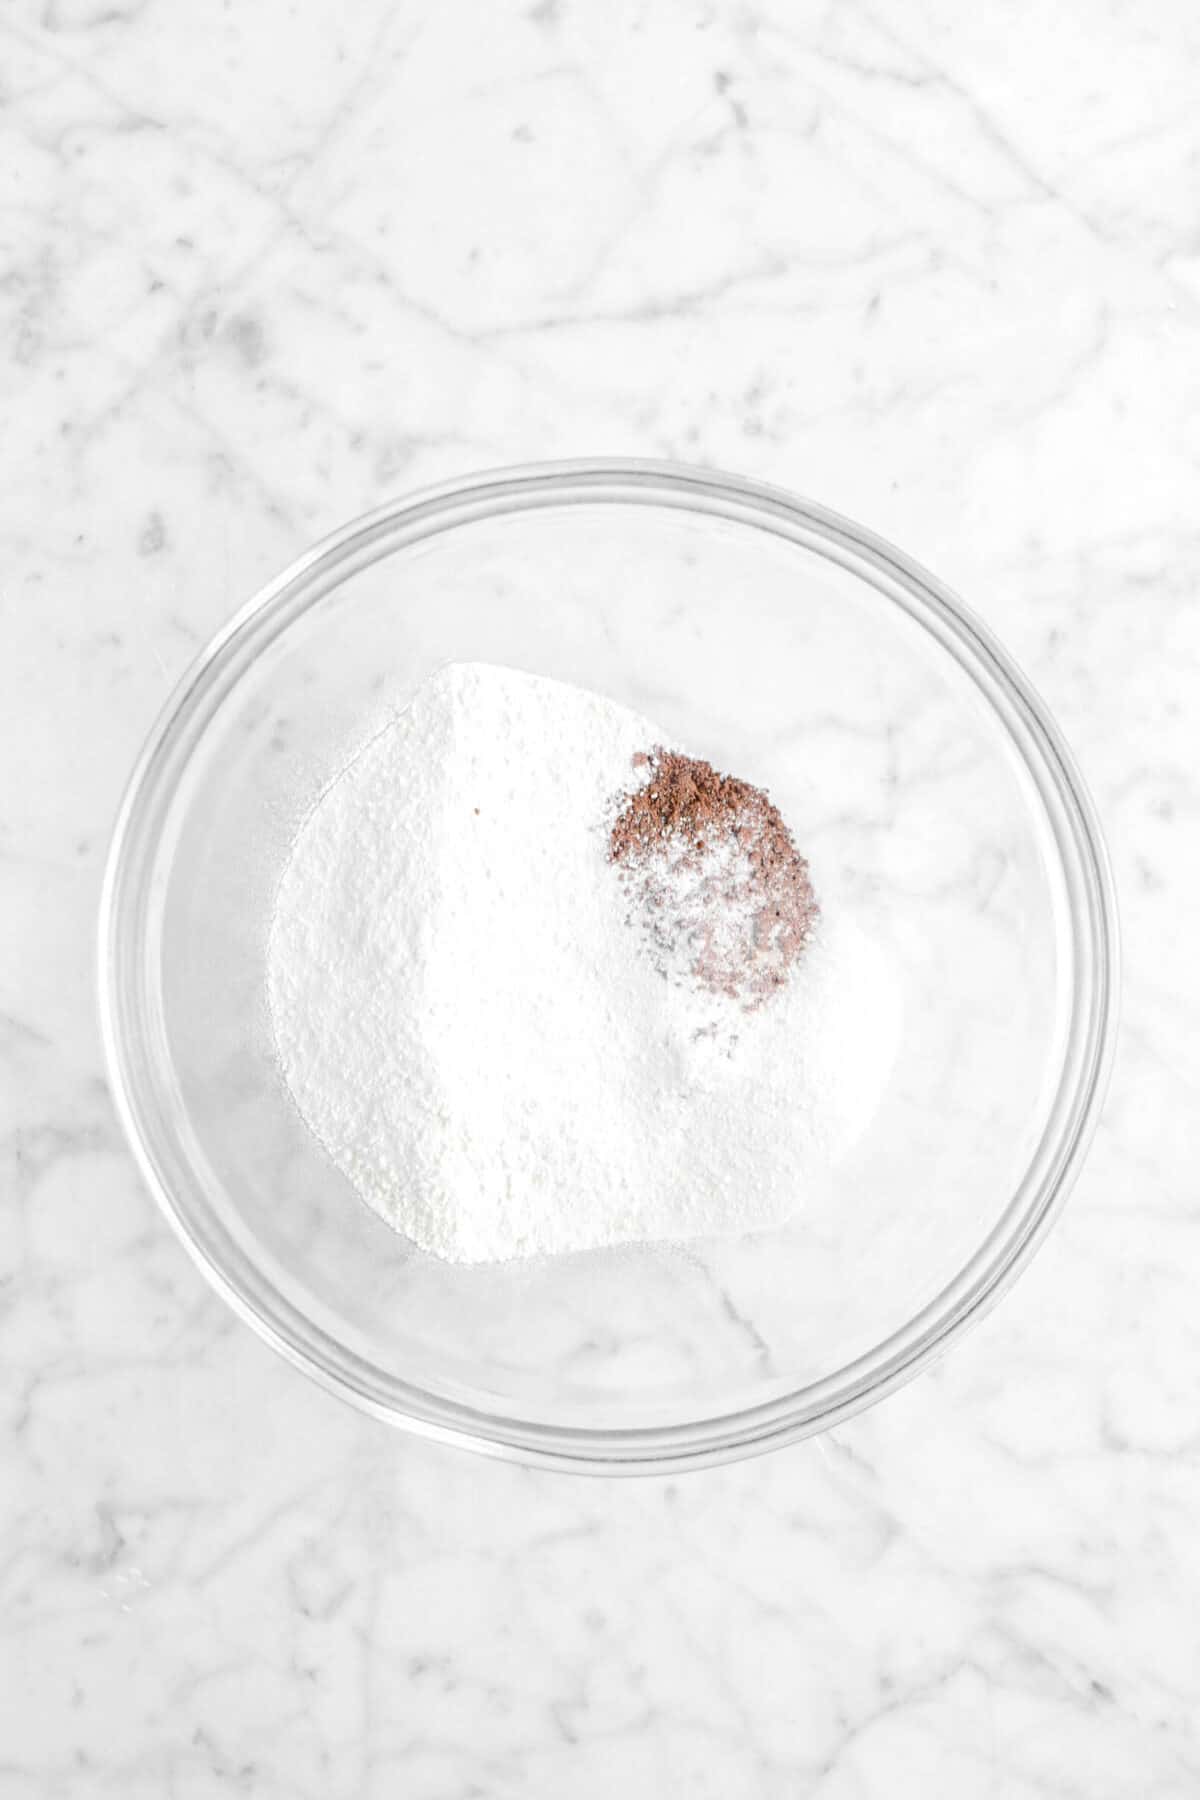 powdered milk, cocoa powder, sugar, and salt in glass bowl